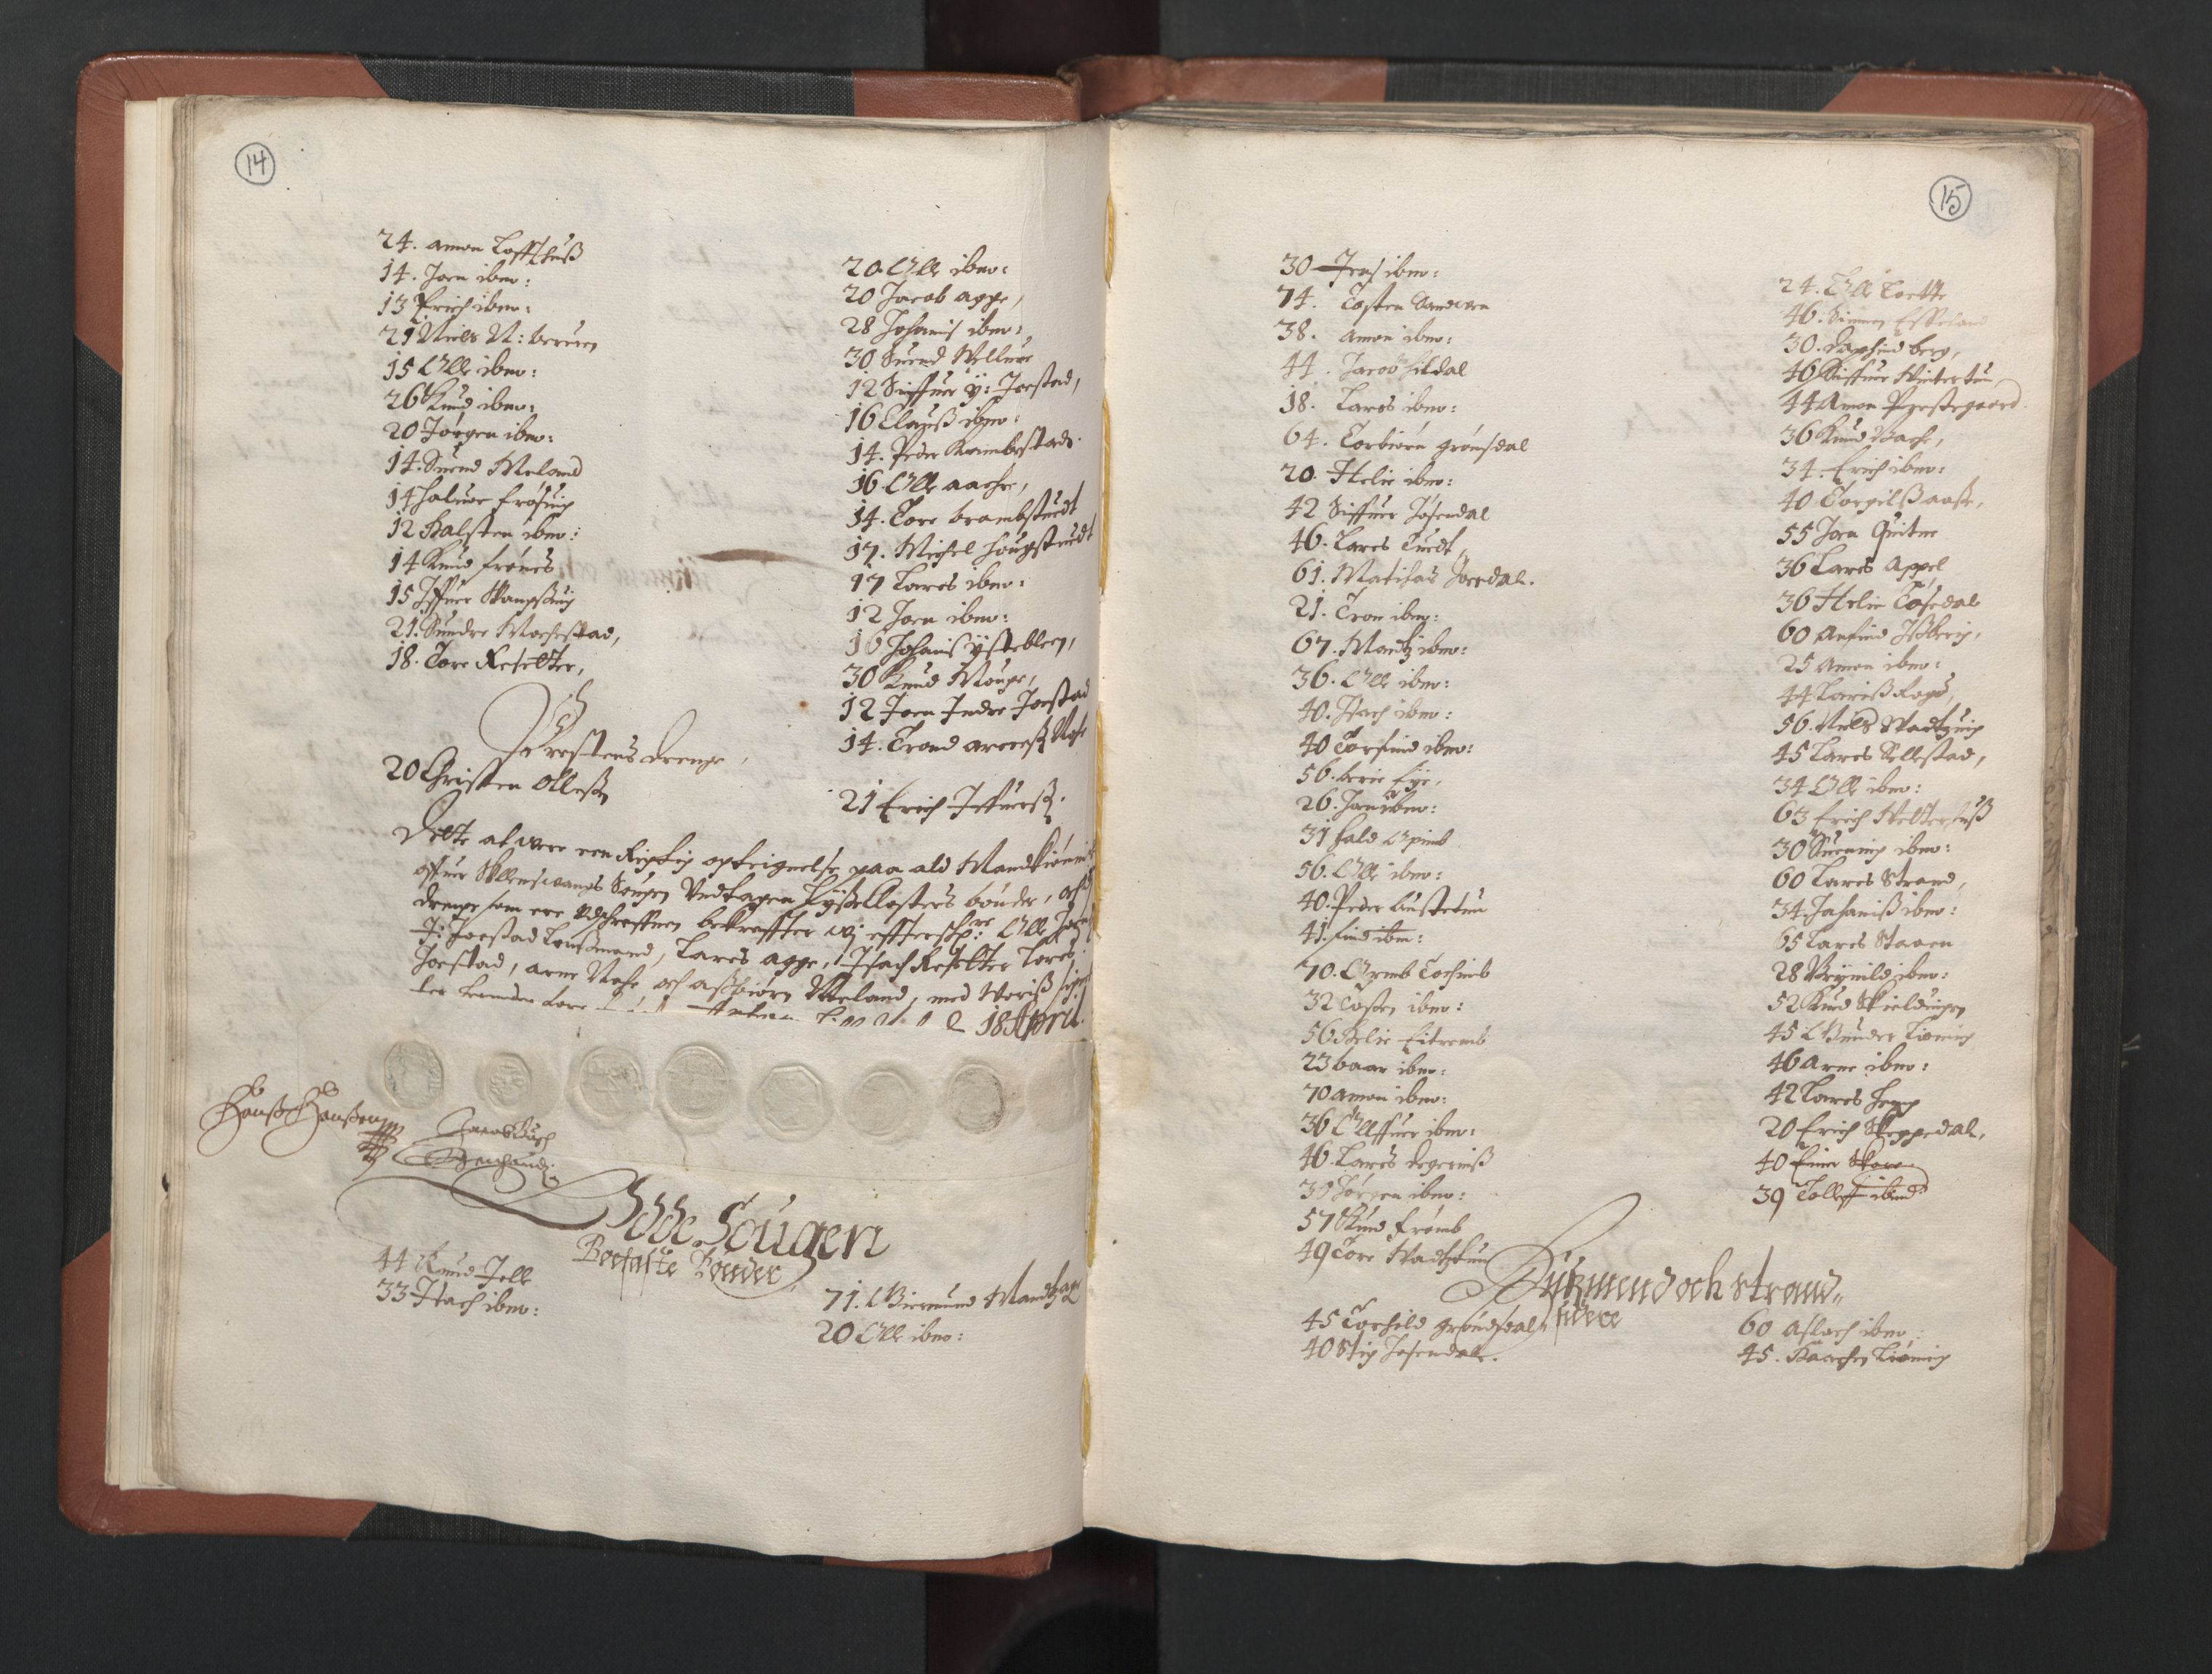 RA, Fogdenes og sorenskrivernes manntall 1664-1666, nr. 14: Hardanger len, Ytre Sogn fogderi og Indre Sogn fogderi, 1664-1665, s. 14-15